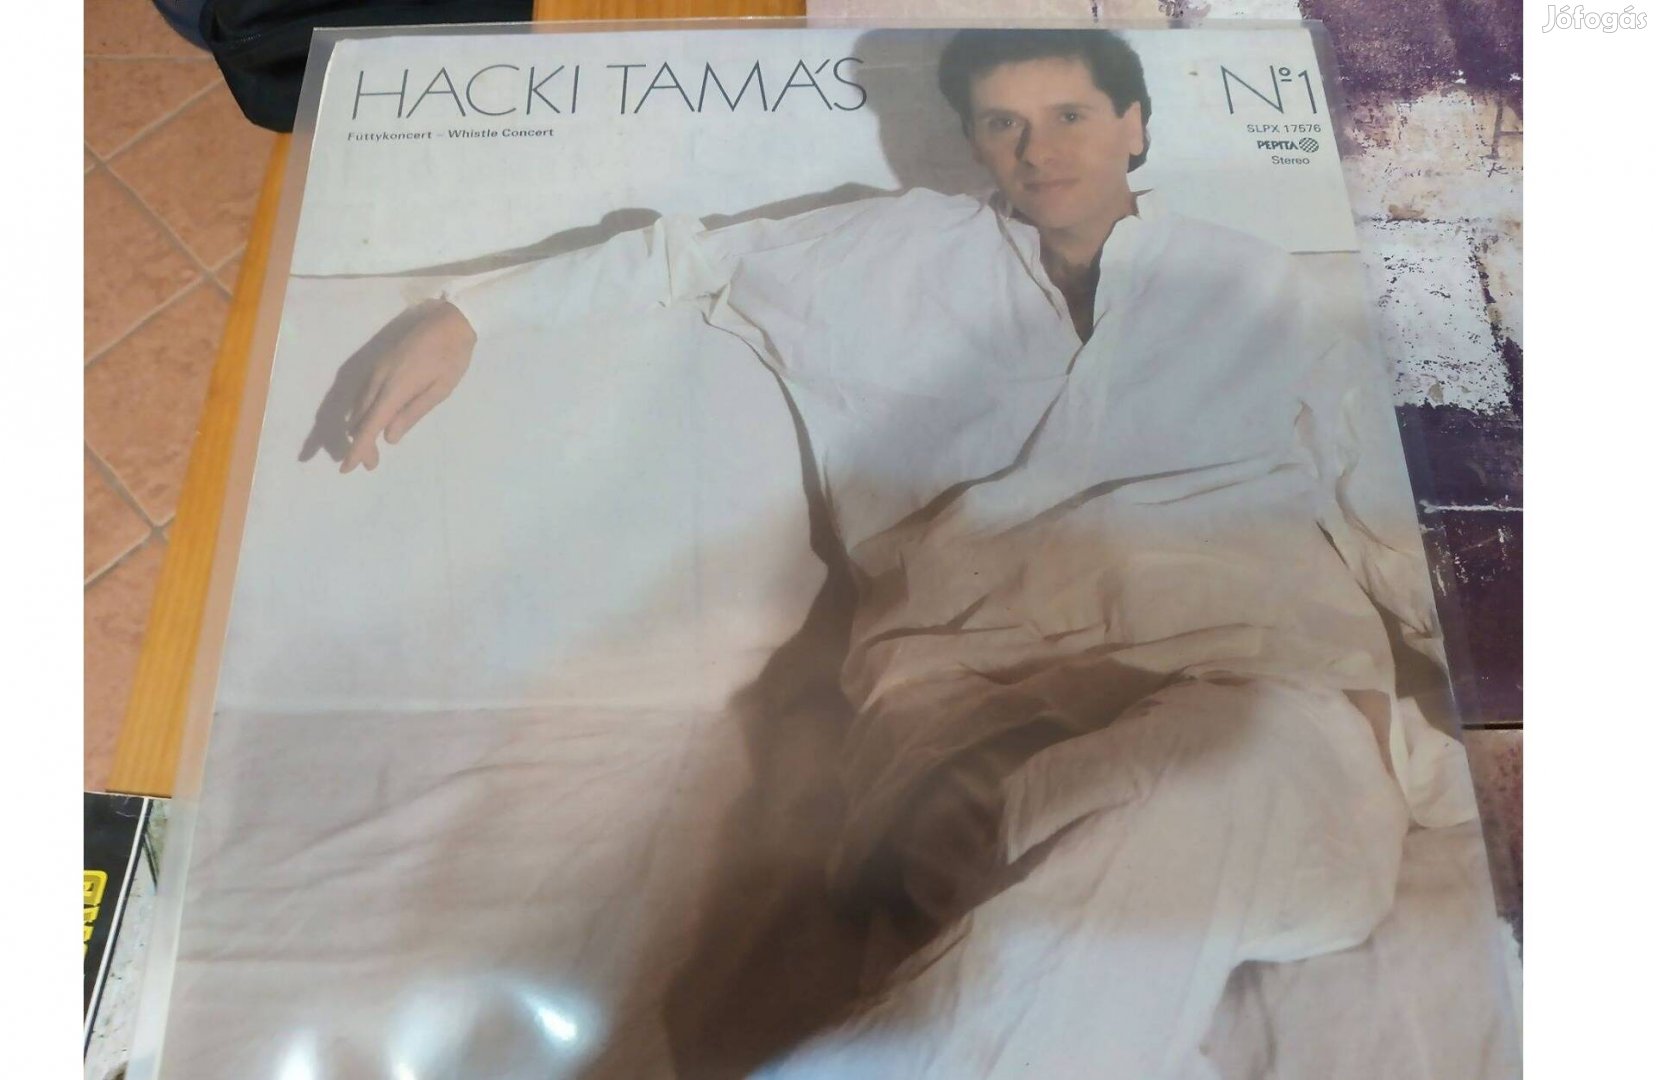 Hacki Tamás bakelit hanglemez eladó